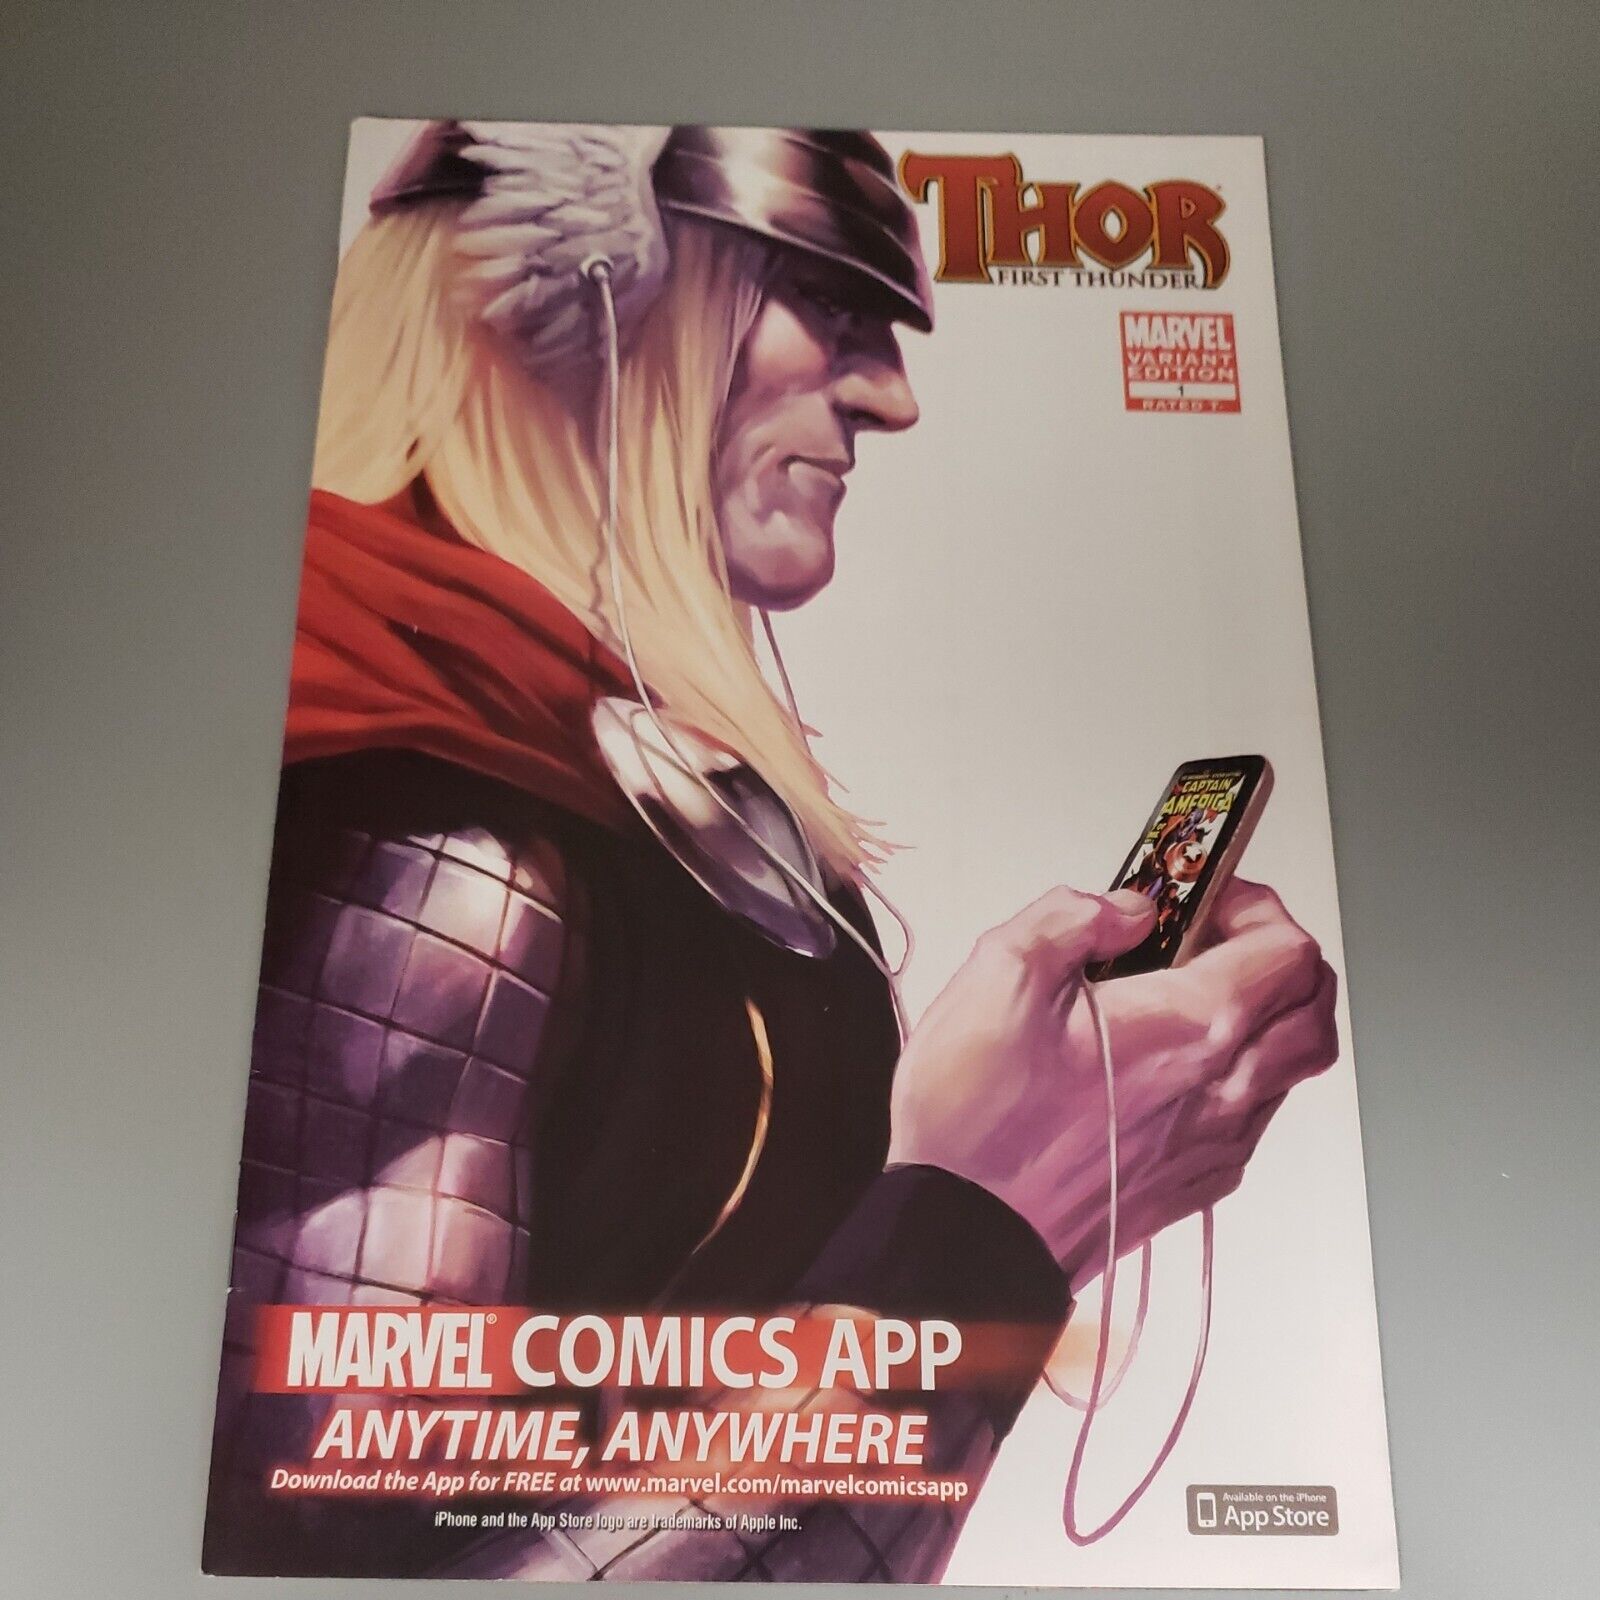 Thor First Thunder #1 Marko Djurdjevic VARIANT 2010 Marvel Comic App iPod iPhone